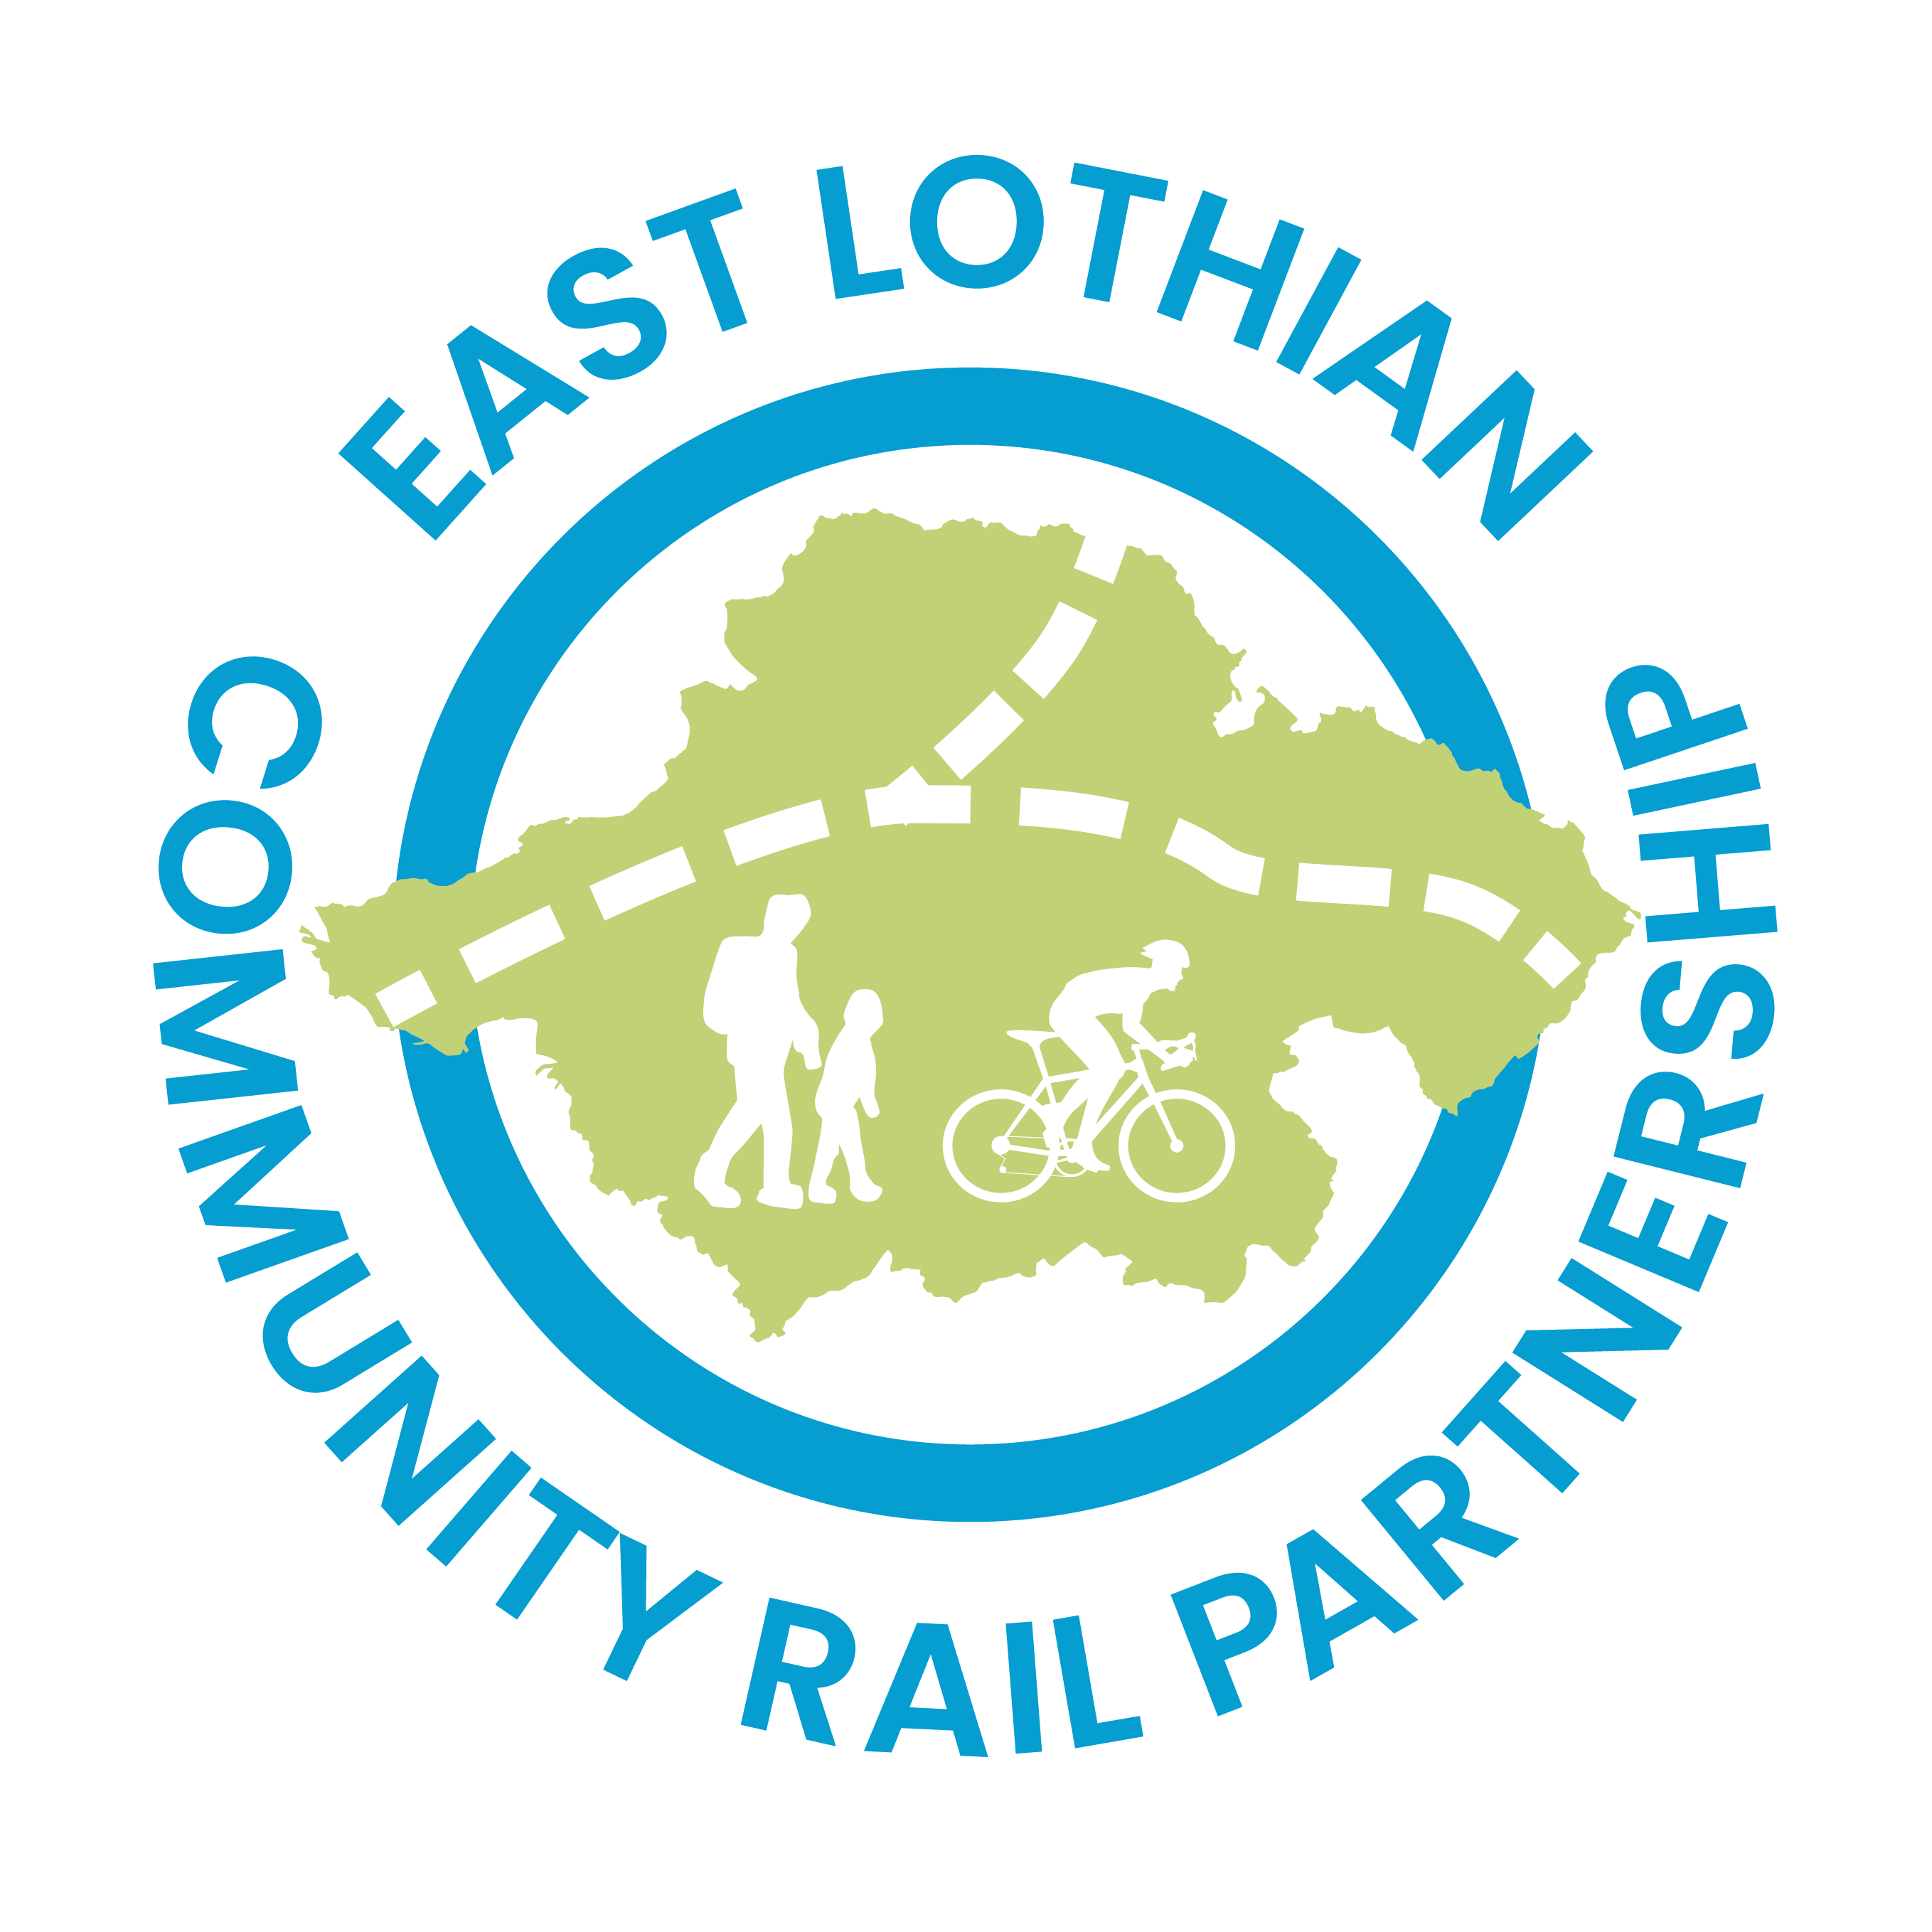 East Lothian Community Rail Partnership